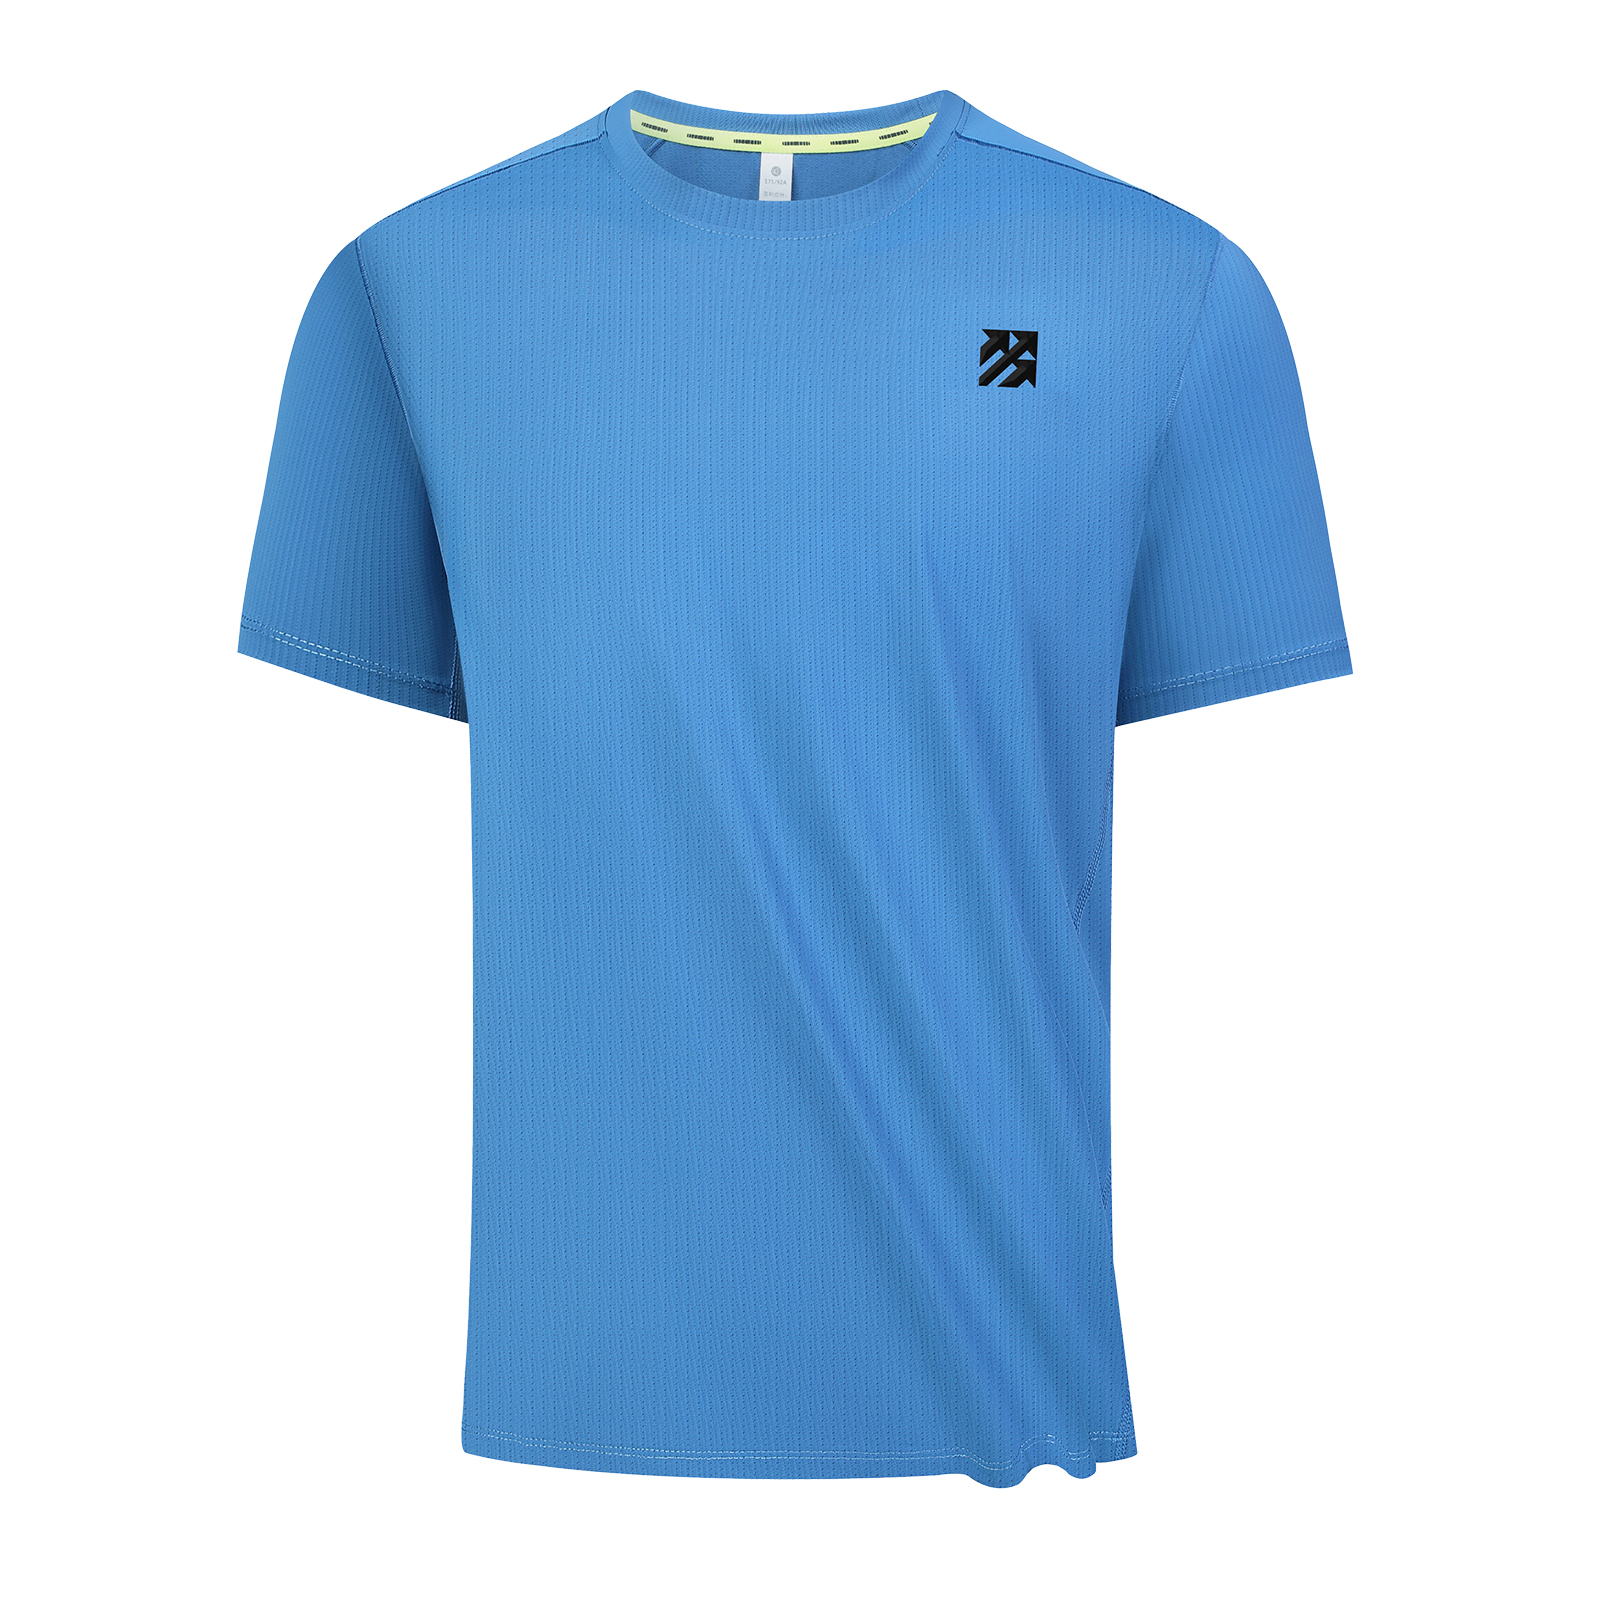  Men's 5A Antimicrobial Sports T-shirt